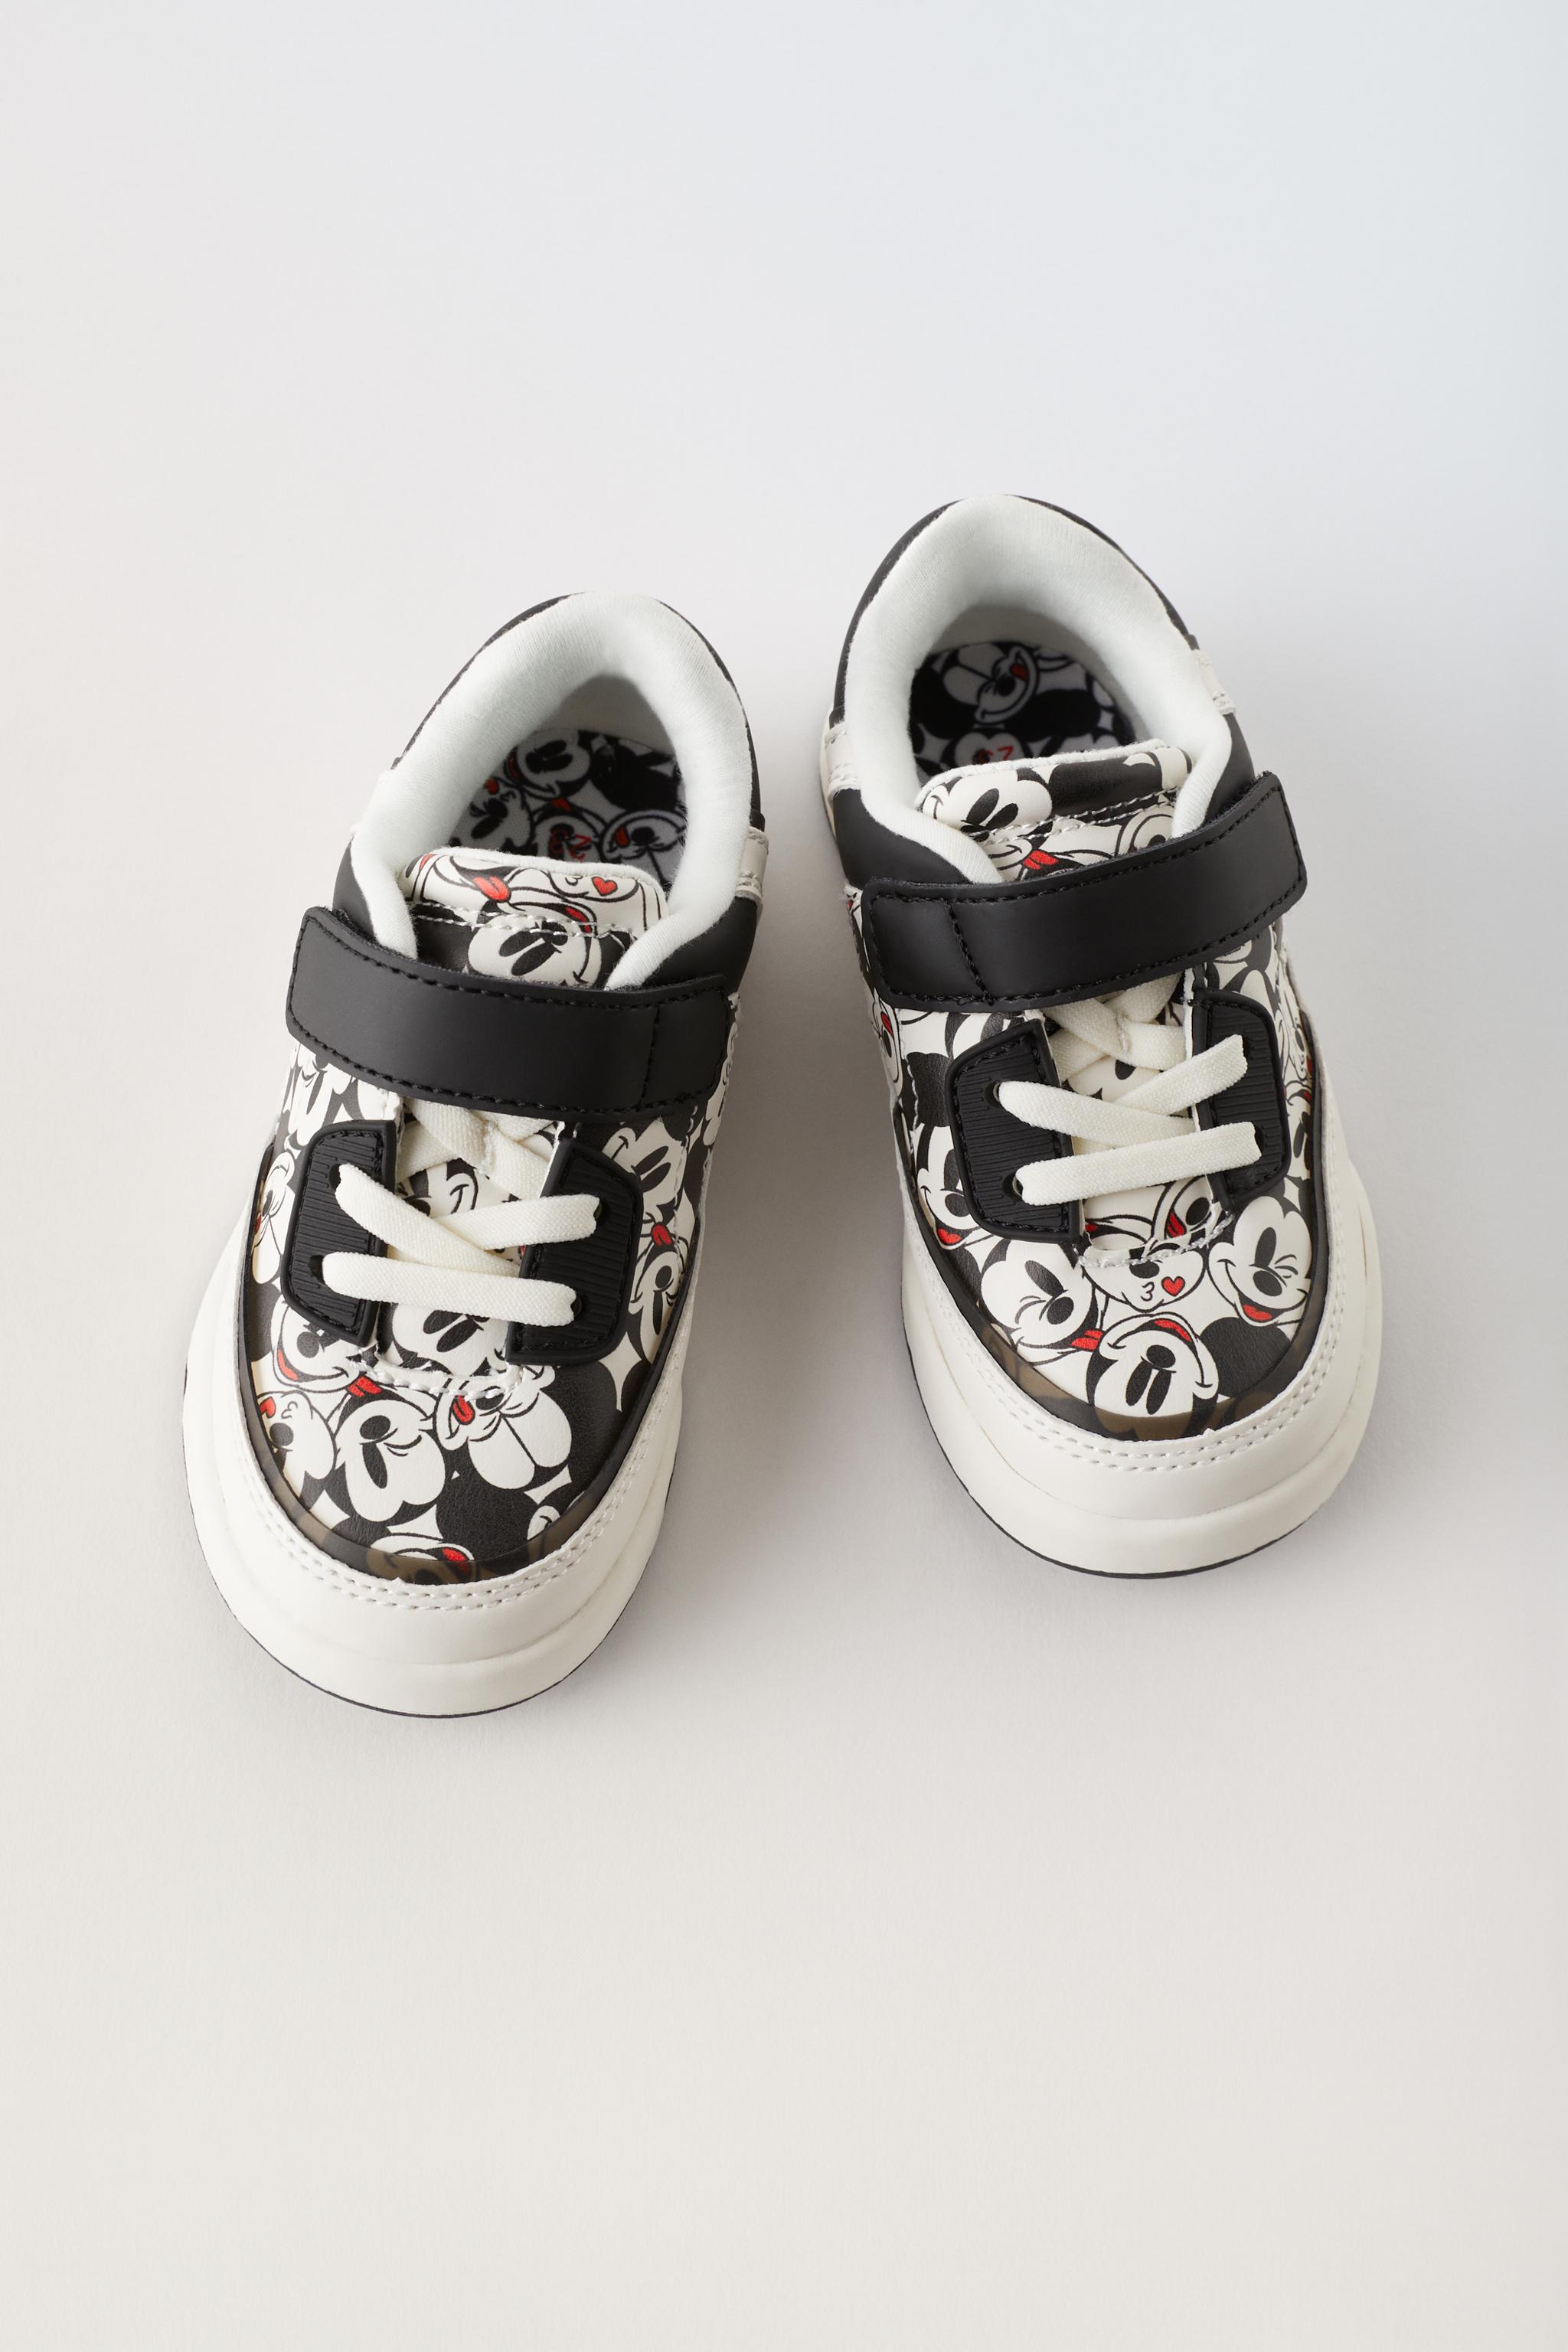 ZARA Lilo & Stitch Disney Sneakers Little Kids Size 12 in White